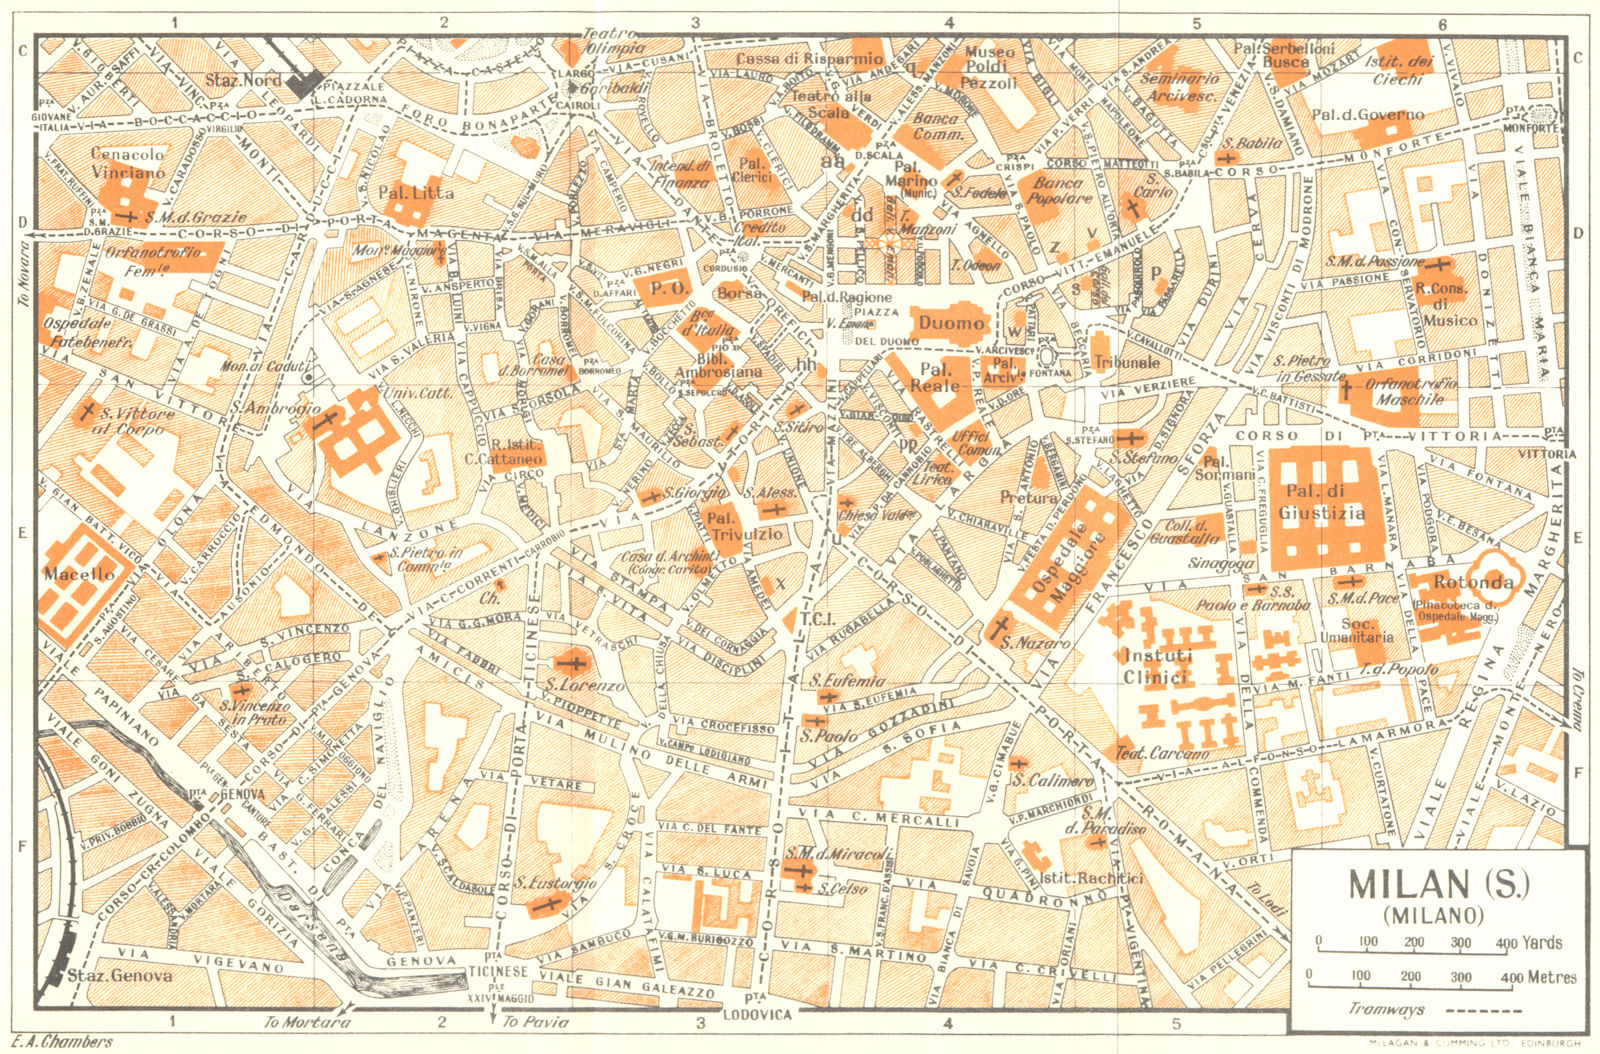 MILAN, S town/city plan. Milano. Italy 1953 old vintage map chart